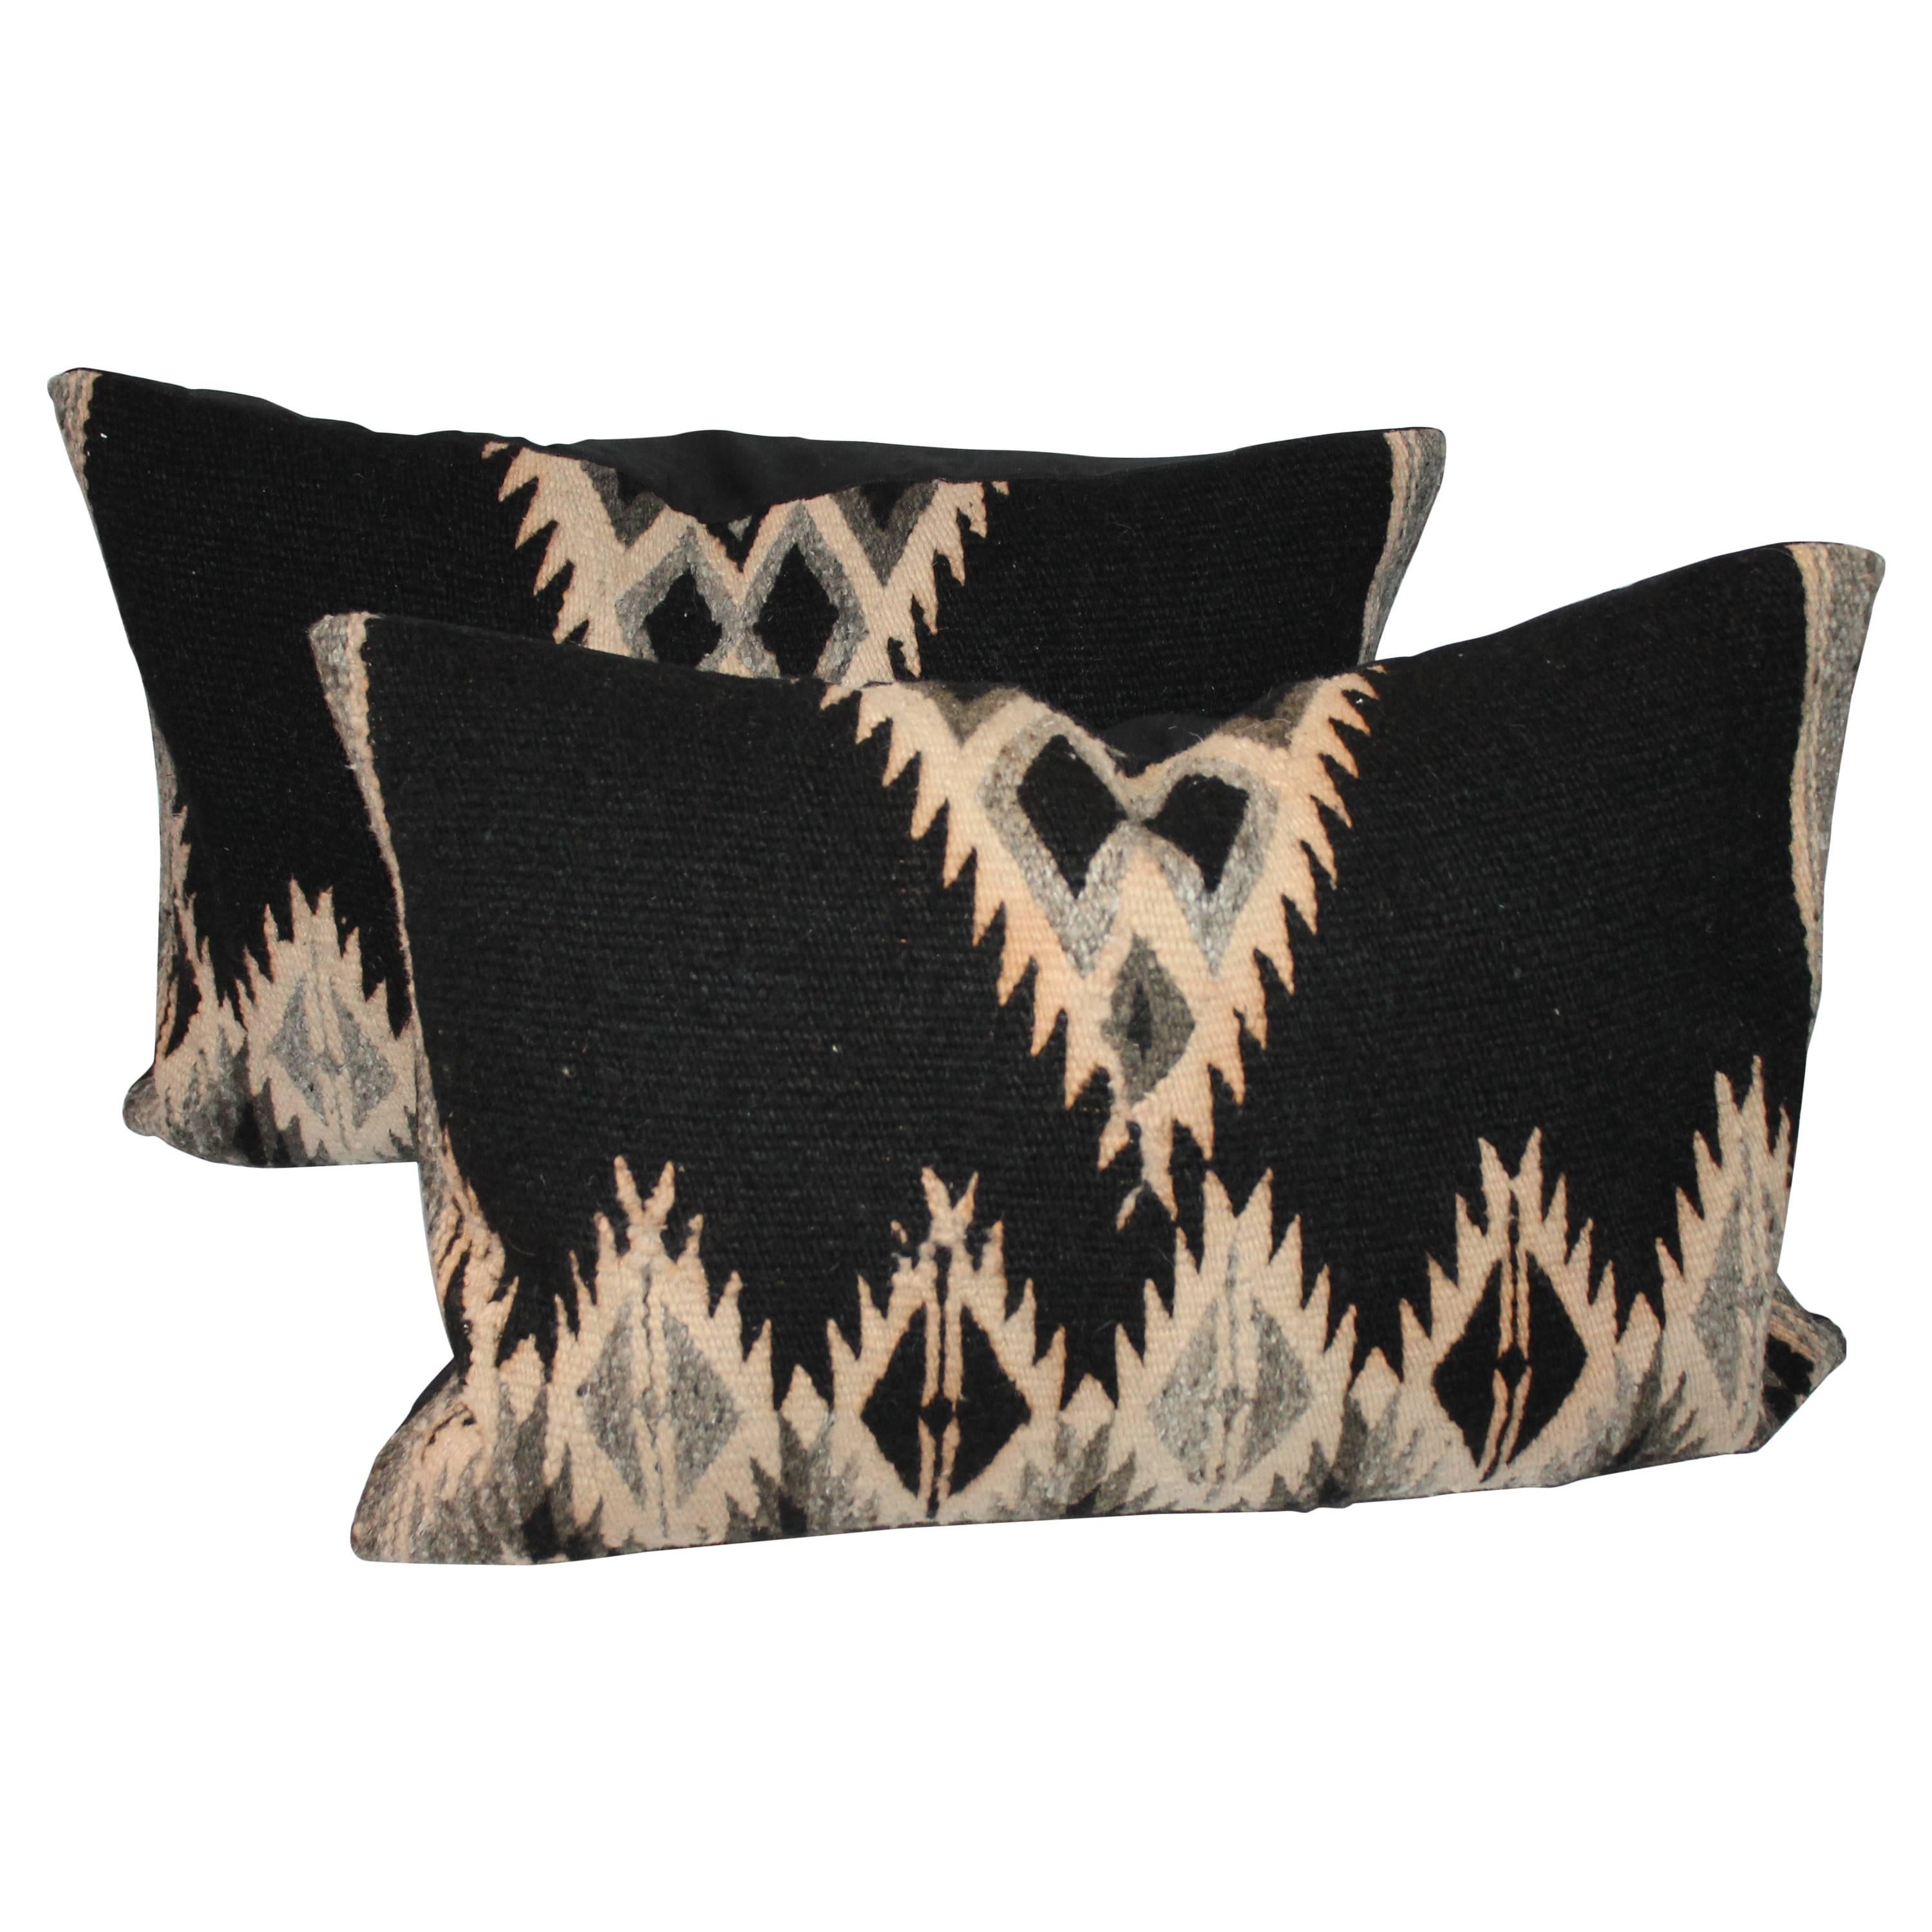 Pair of Indian Weaving Bolster Pillows